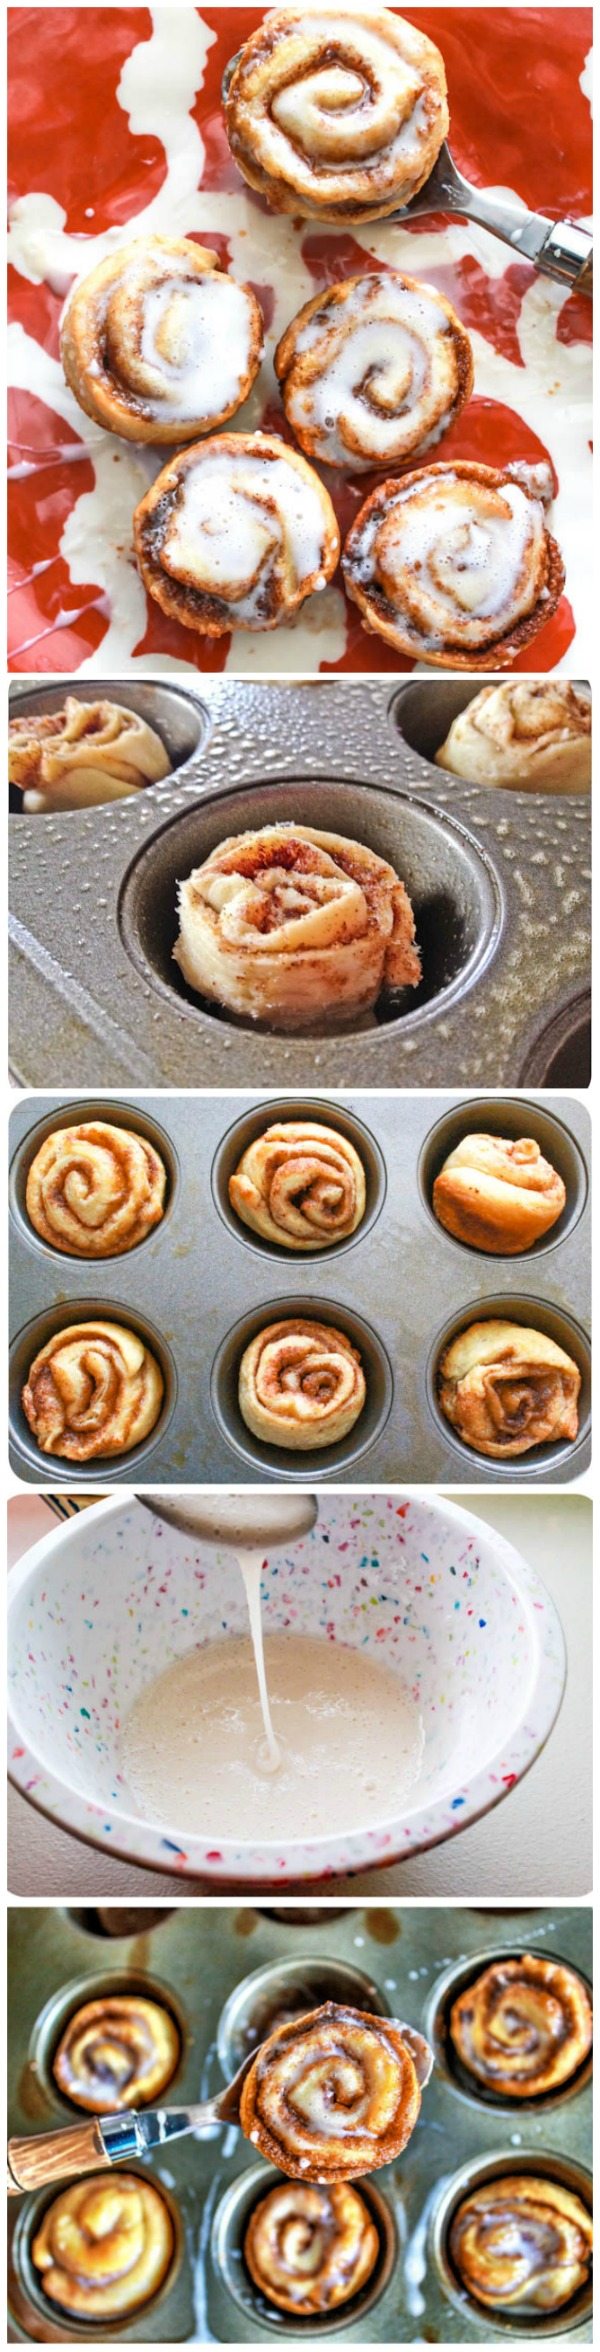 5 images of mini no yeast cinnamon buns